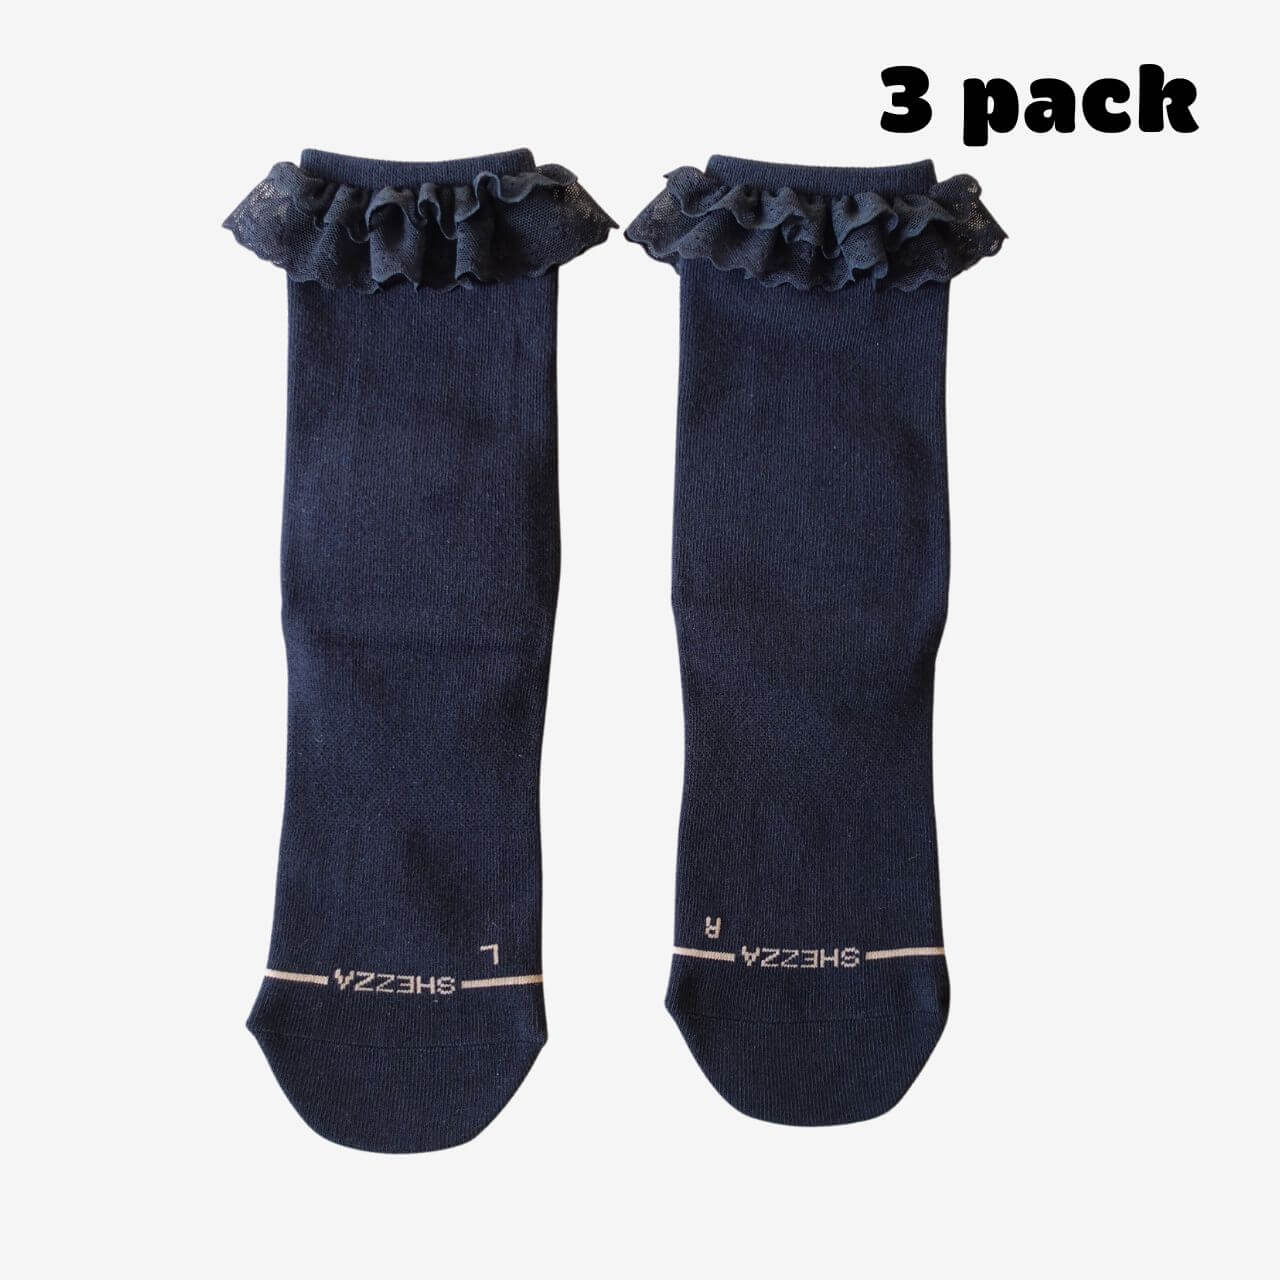 Black lace socks pack